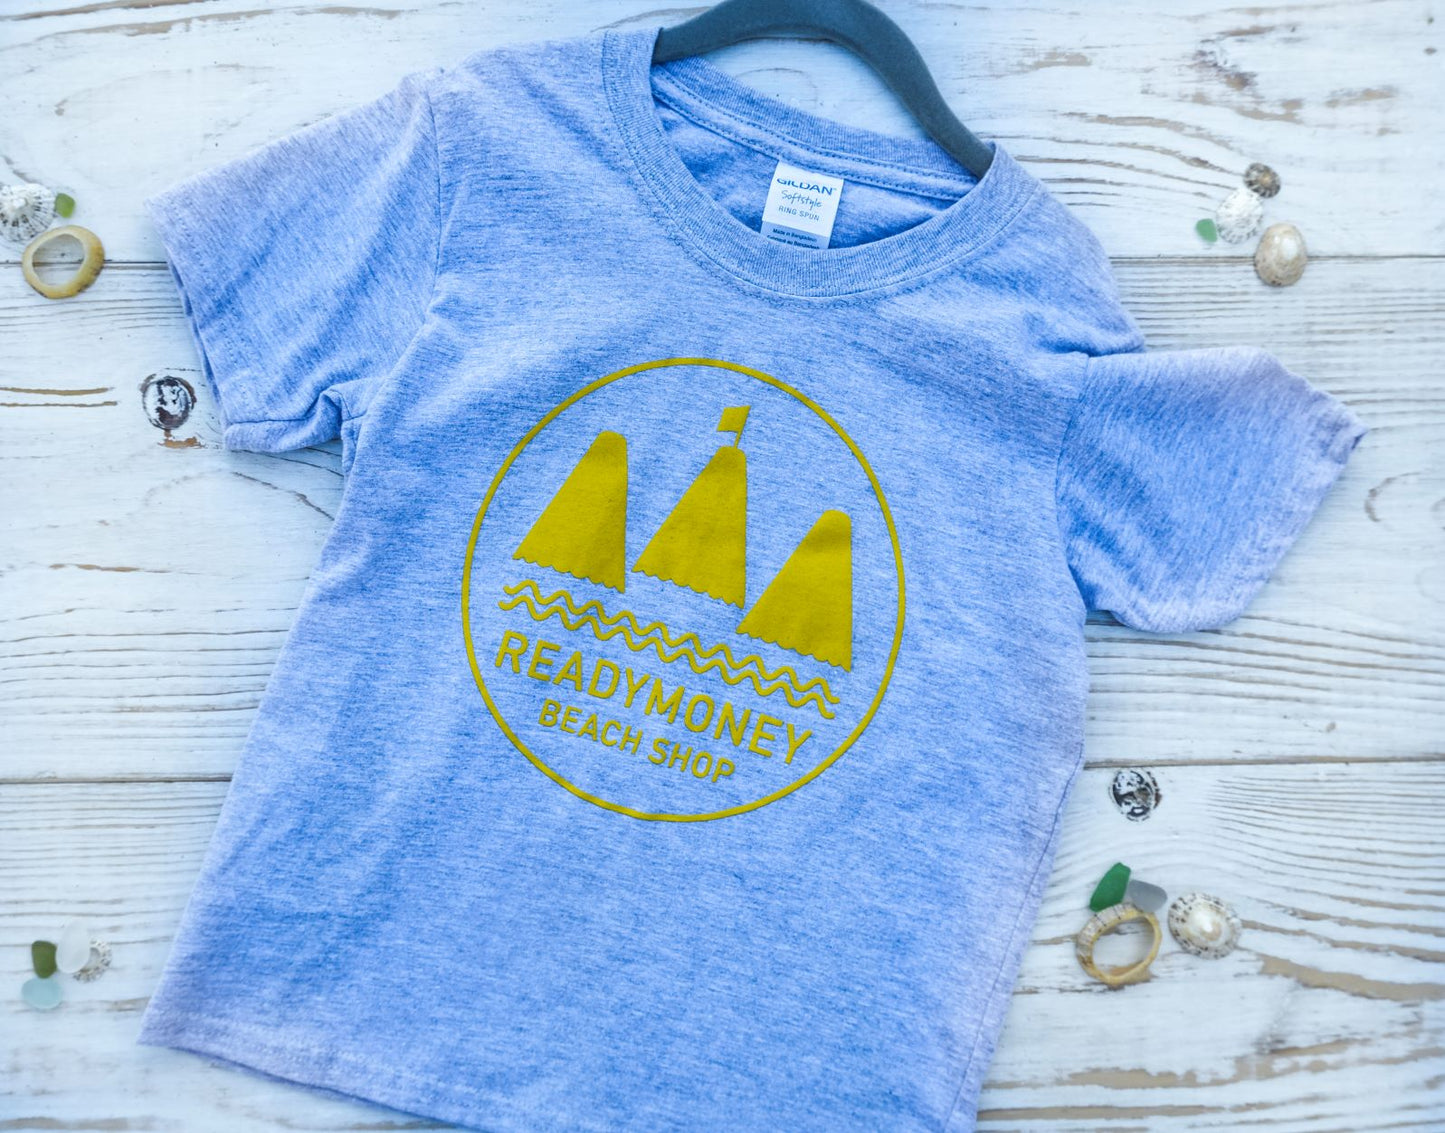 Child's Readymoney Beach Shop Logo T - Shirt Top - Readymoney Beach Shop